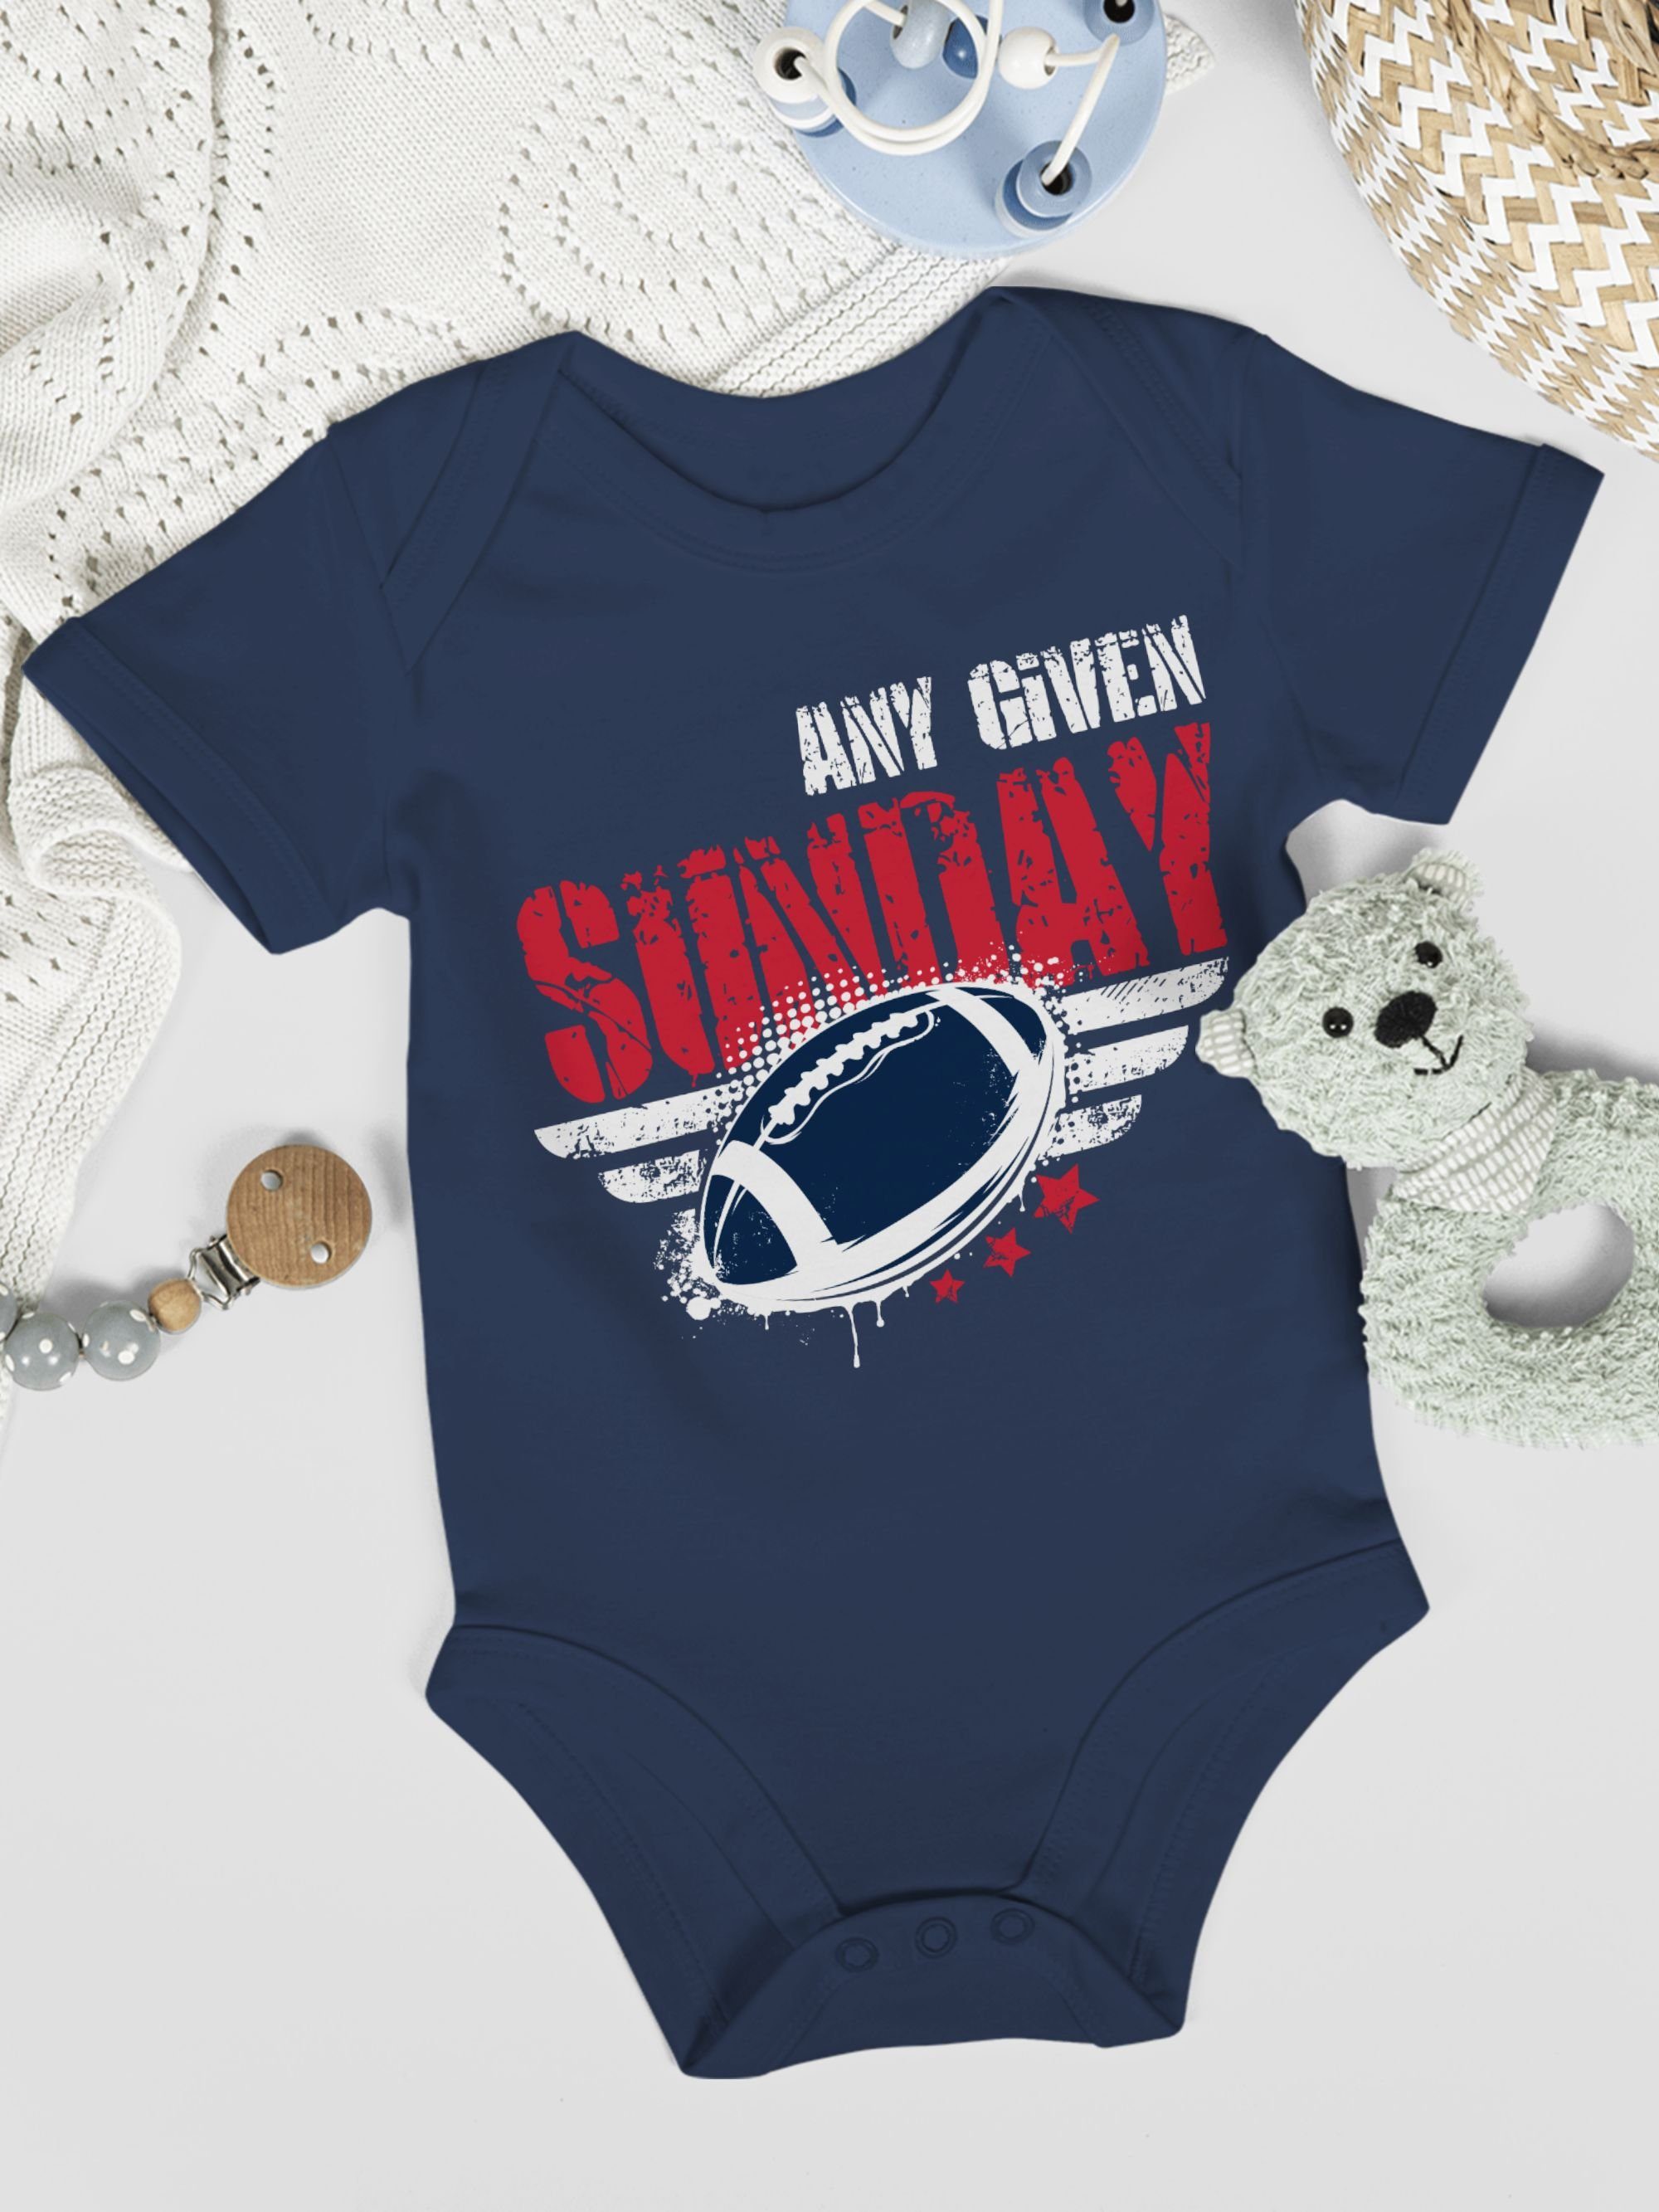 Given Sport Blau & Shirtracer 1 New England Baby Bewegung Sunday Any Navy Football Shirtbody